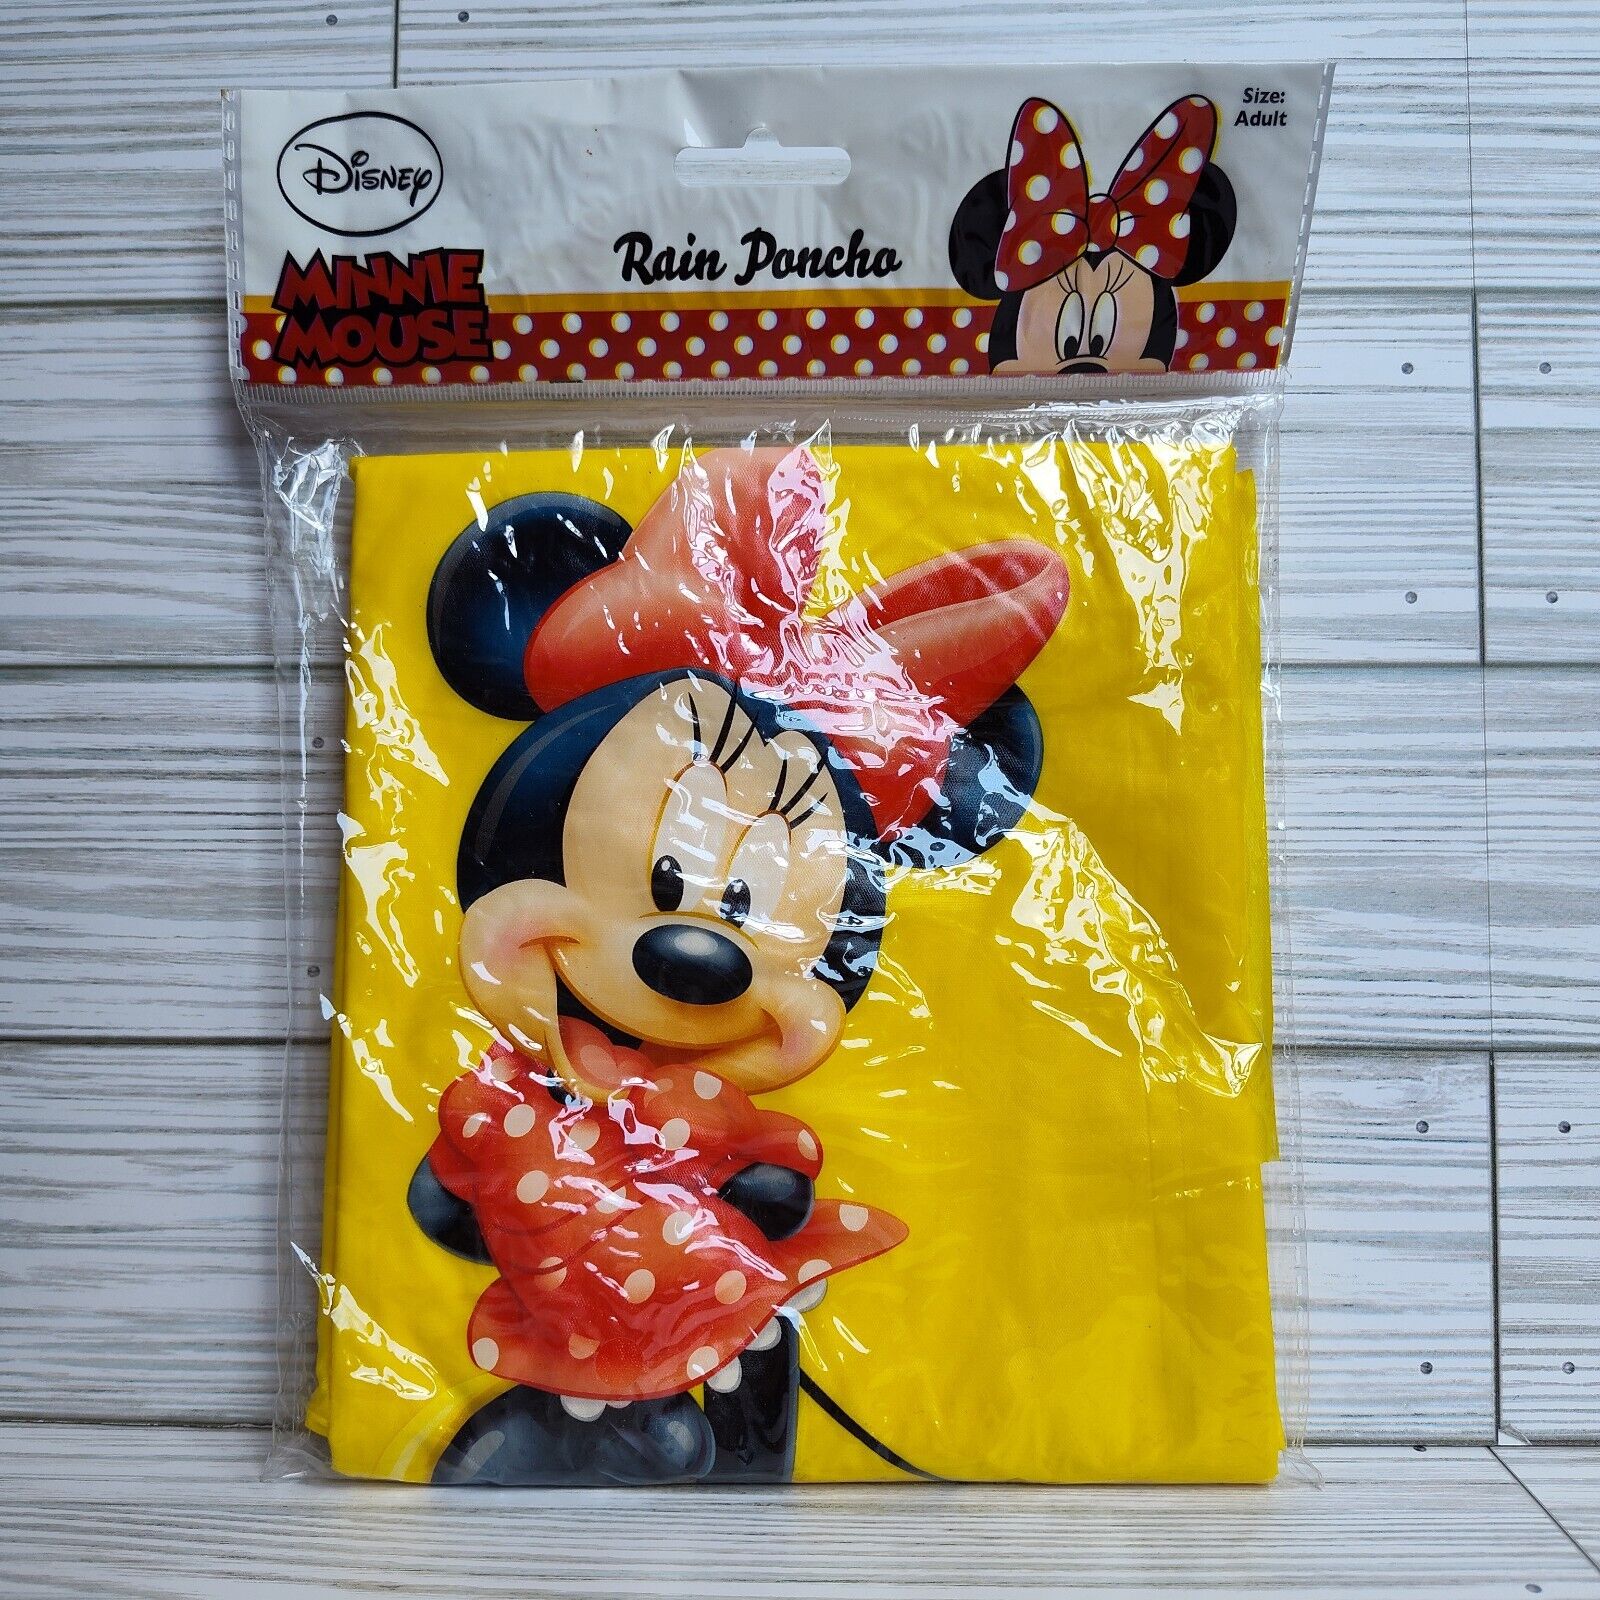 New Disney Minnie Mouse Rain Poncho Adult Size NRFP Factory Sealed Vinyl